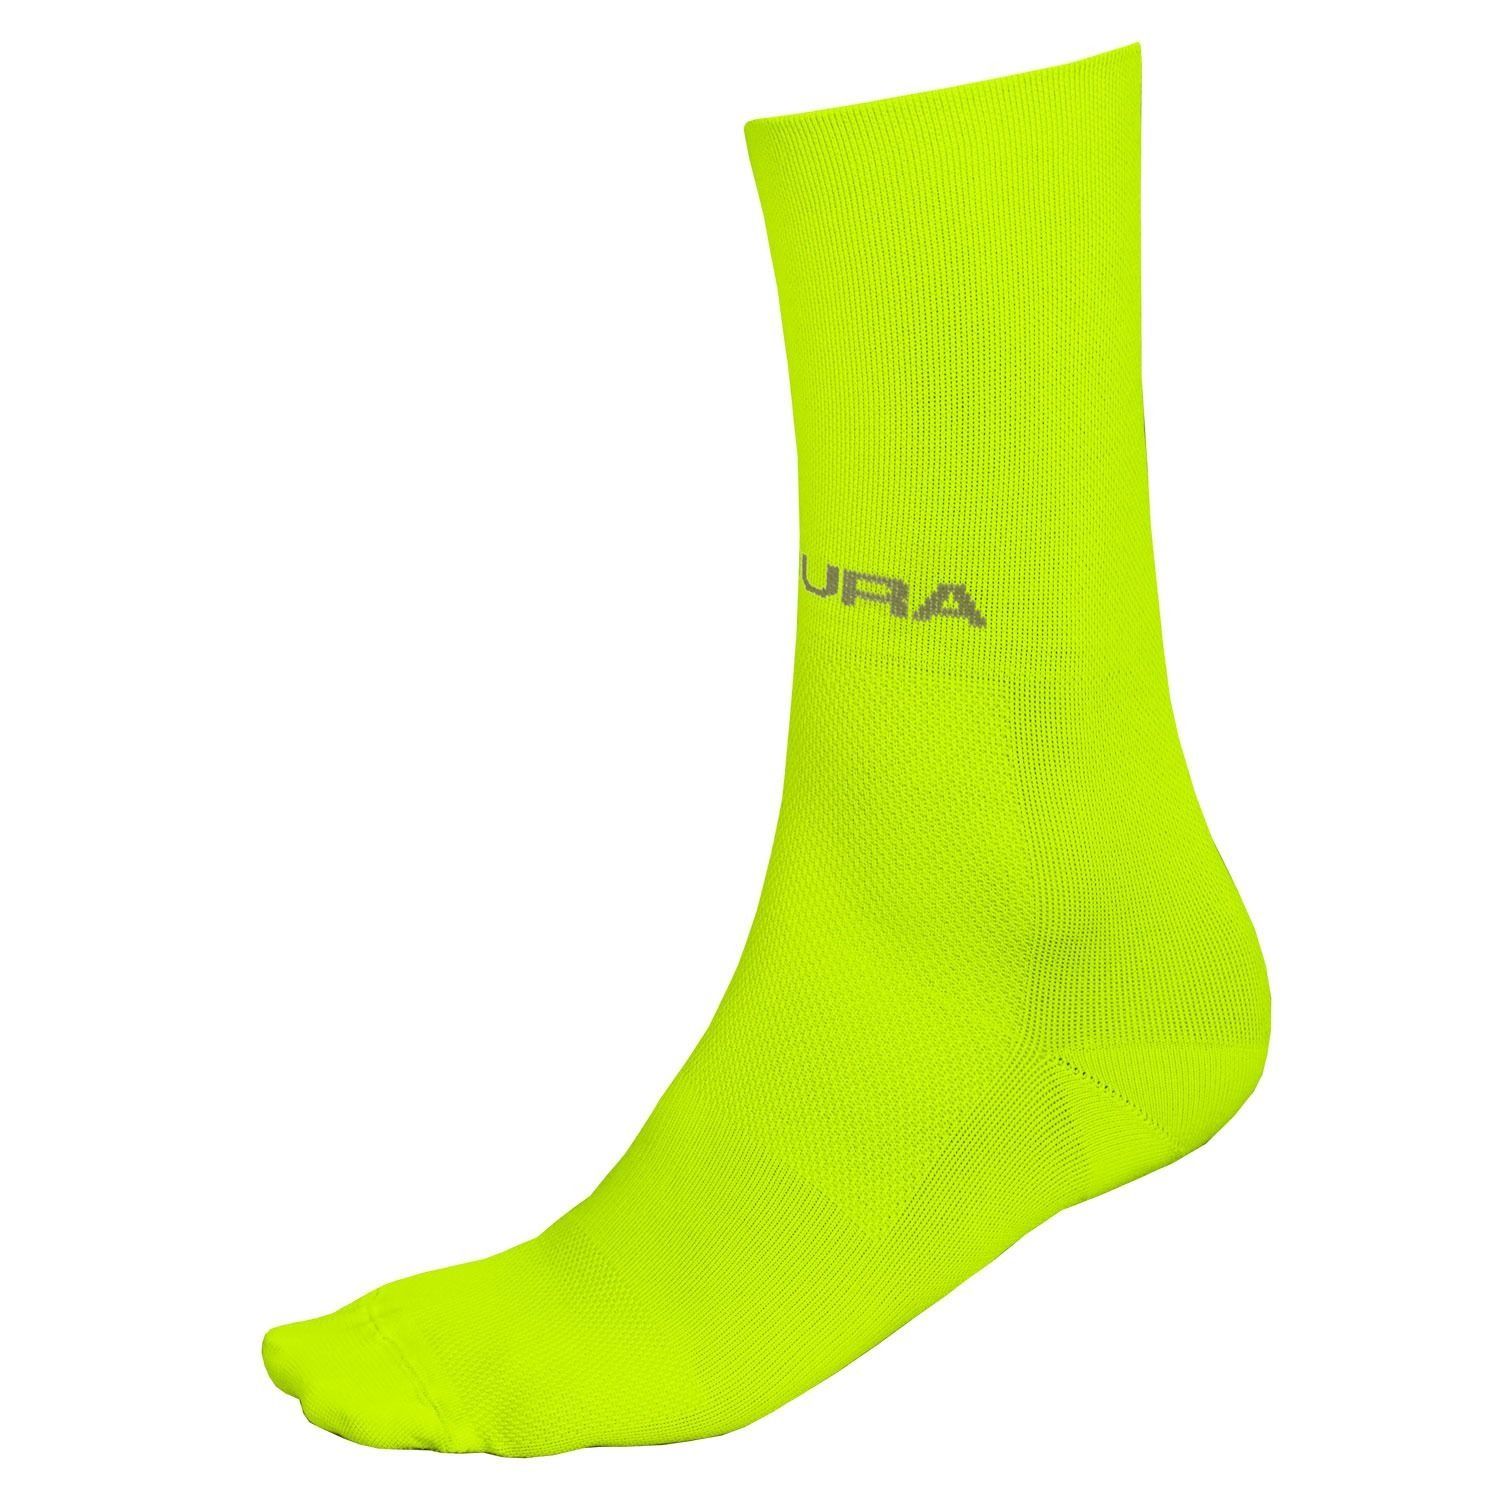 Endura Pro SL 2 Socks (single Pack) HI-VIZ Yellow - £8.49 | Socks ...